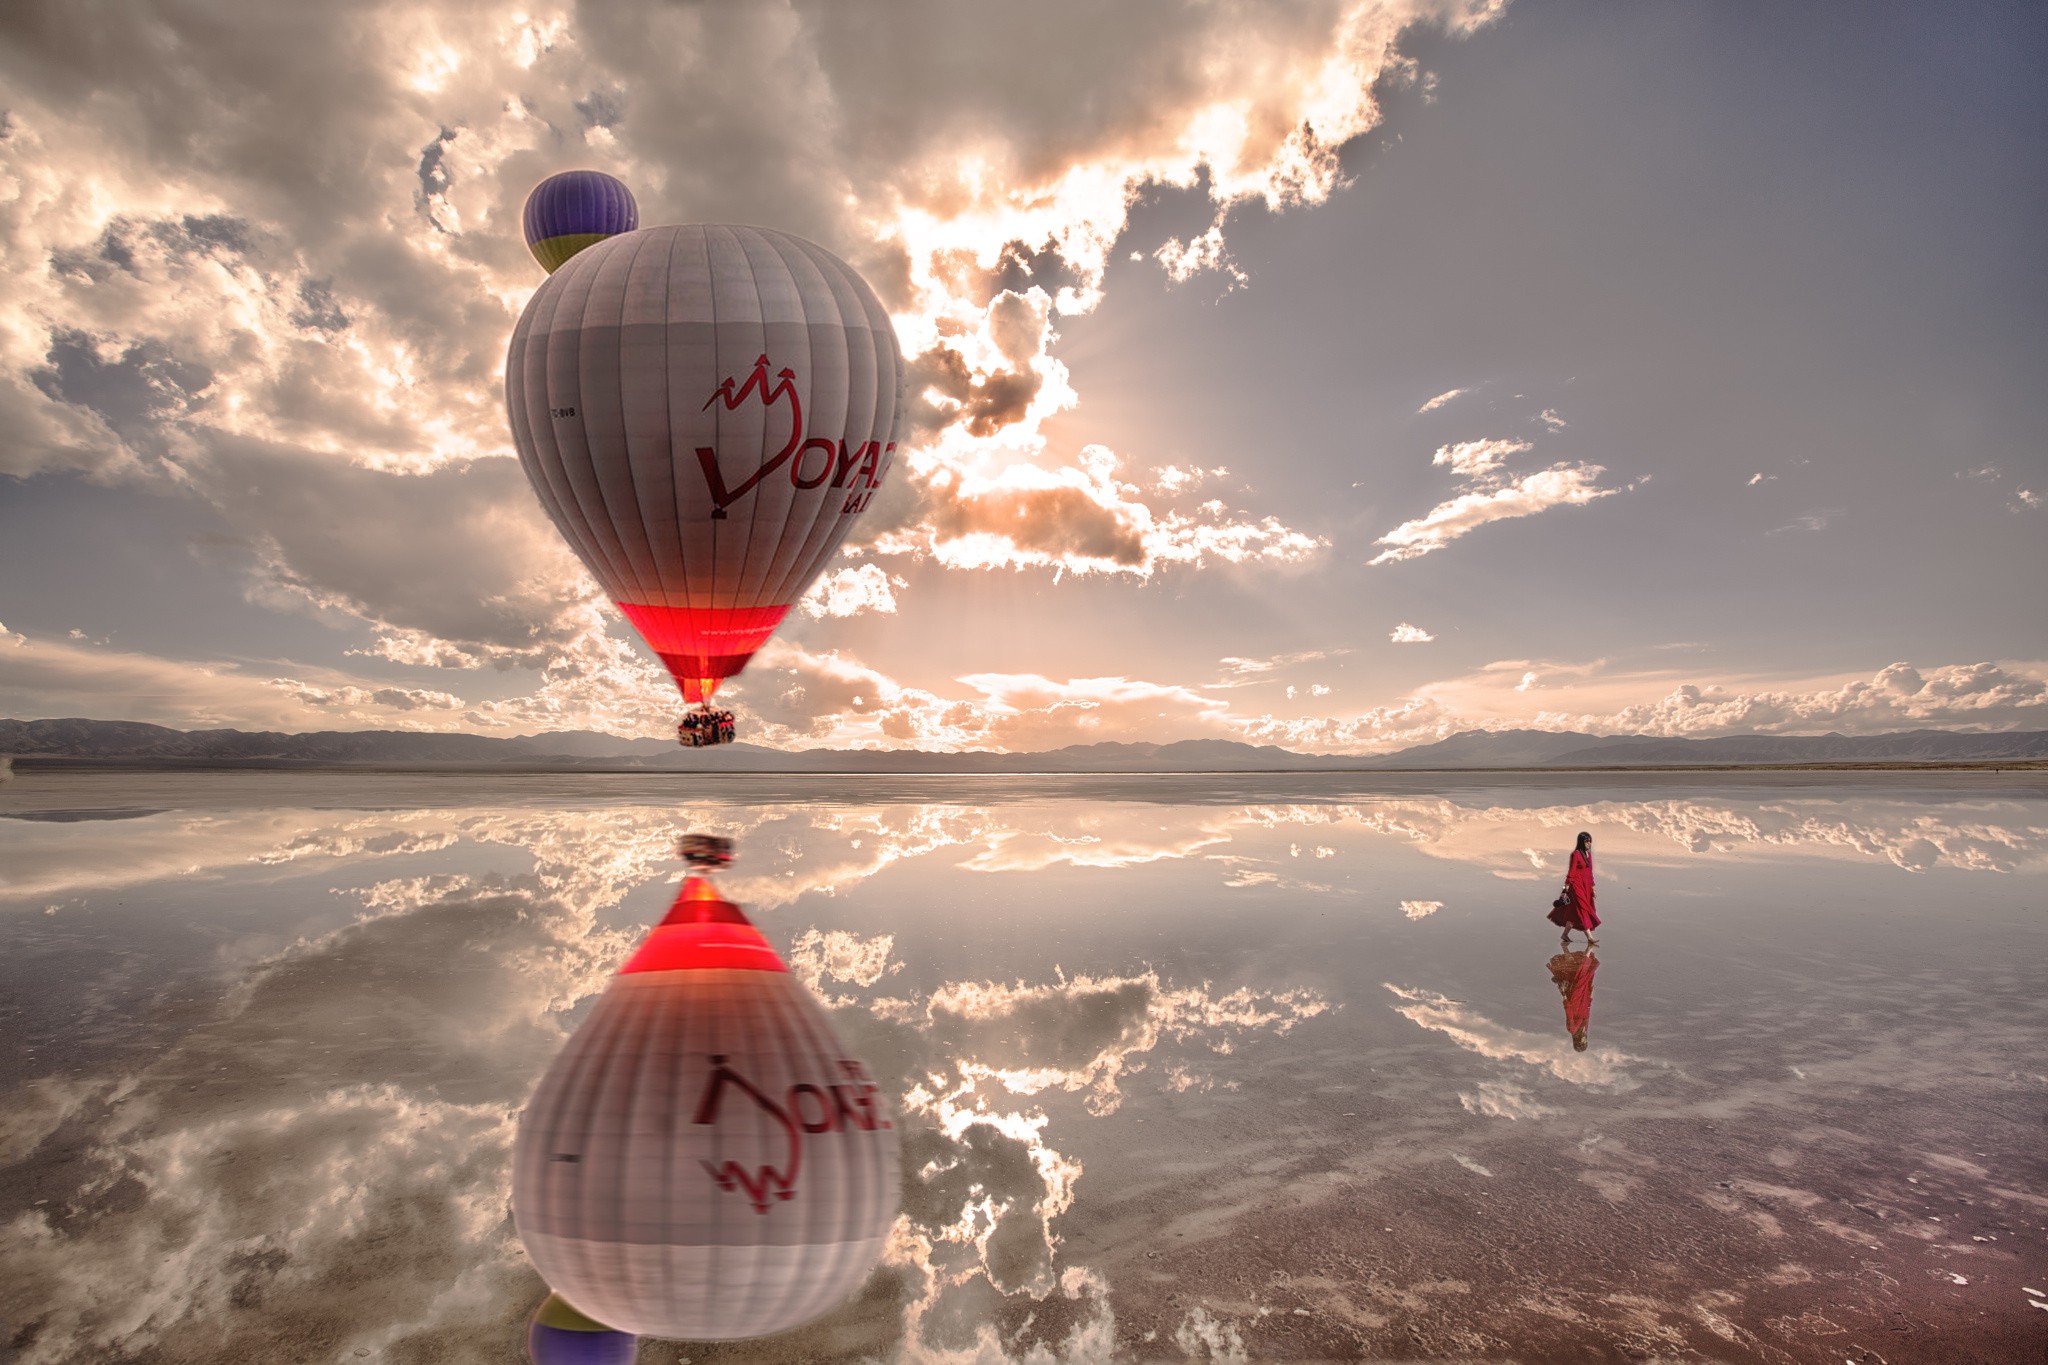 General 2048x1365 hot air balloons reflection sky outdoors sunlight water women vehicle women outdoors